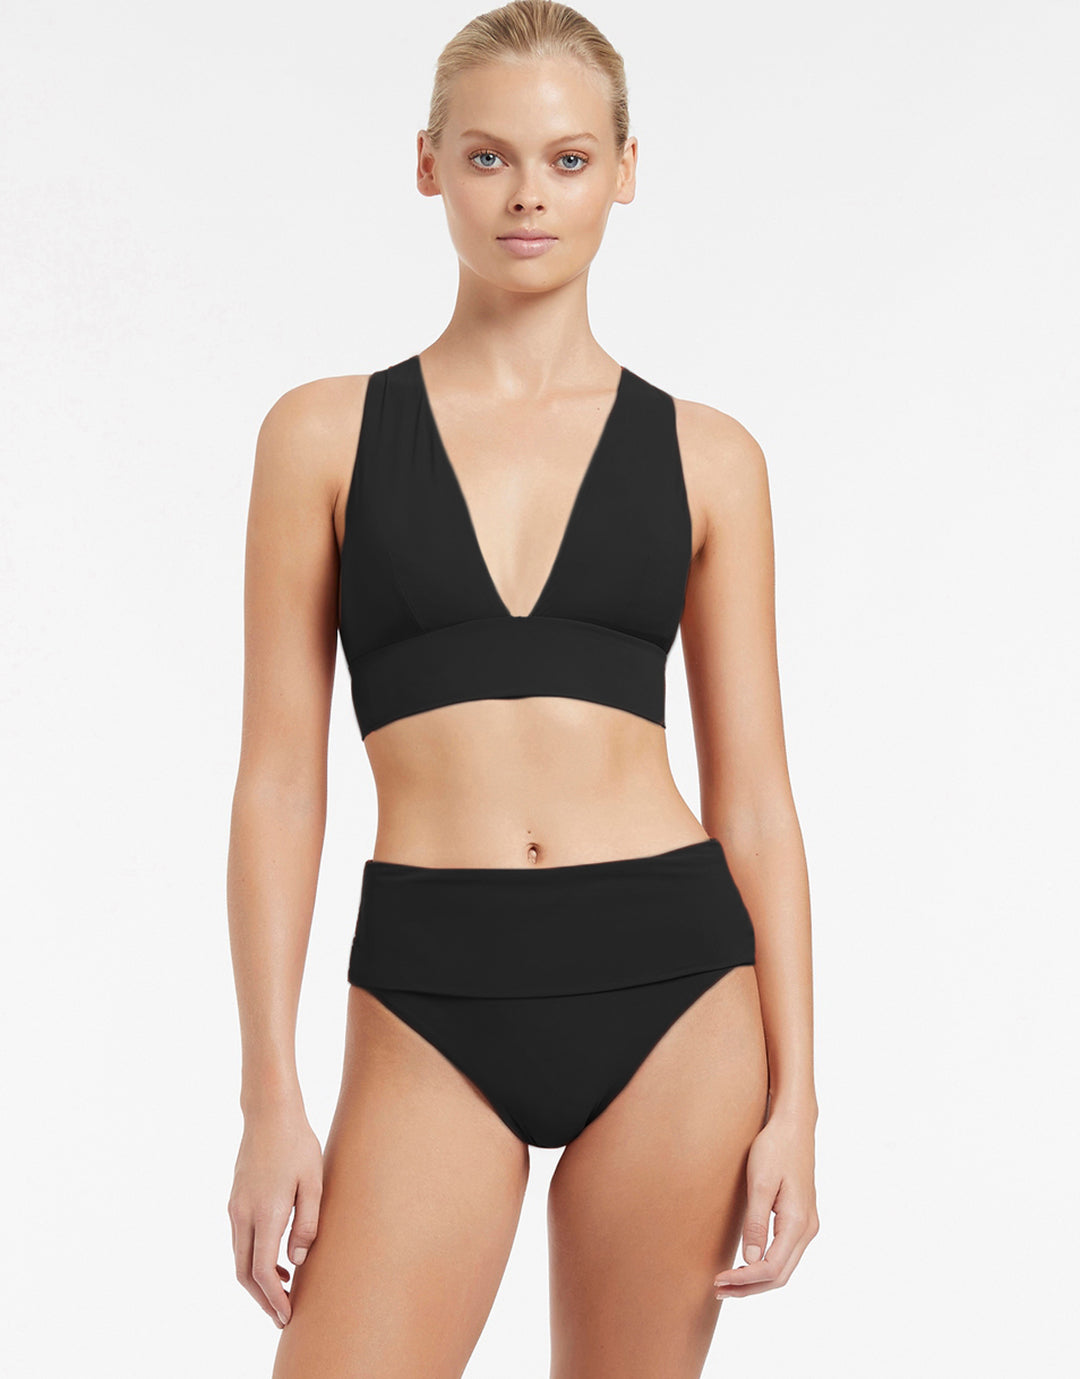 Jetset Soft Tri Bikini Top - Black - Simply Beach UK